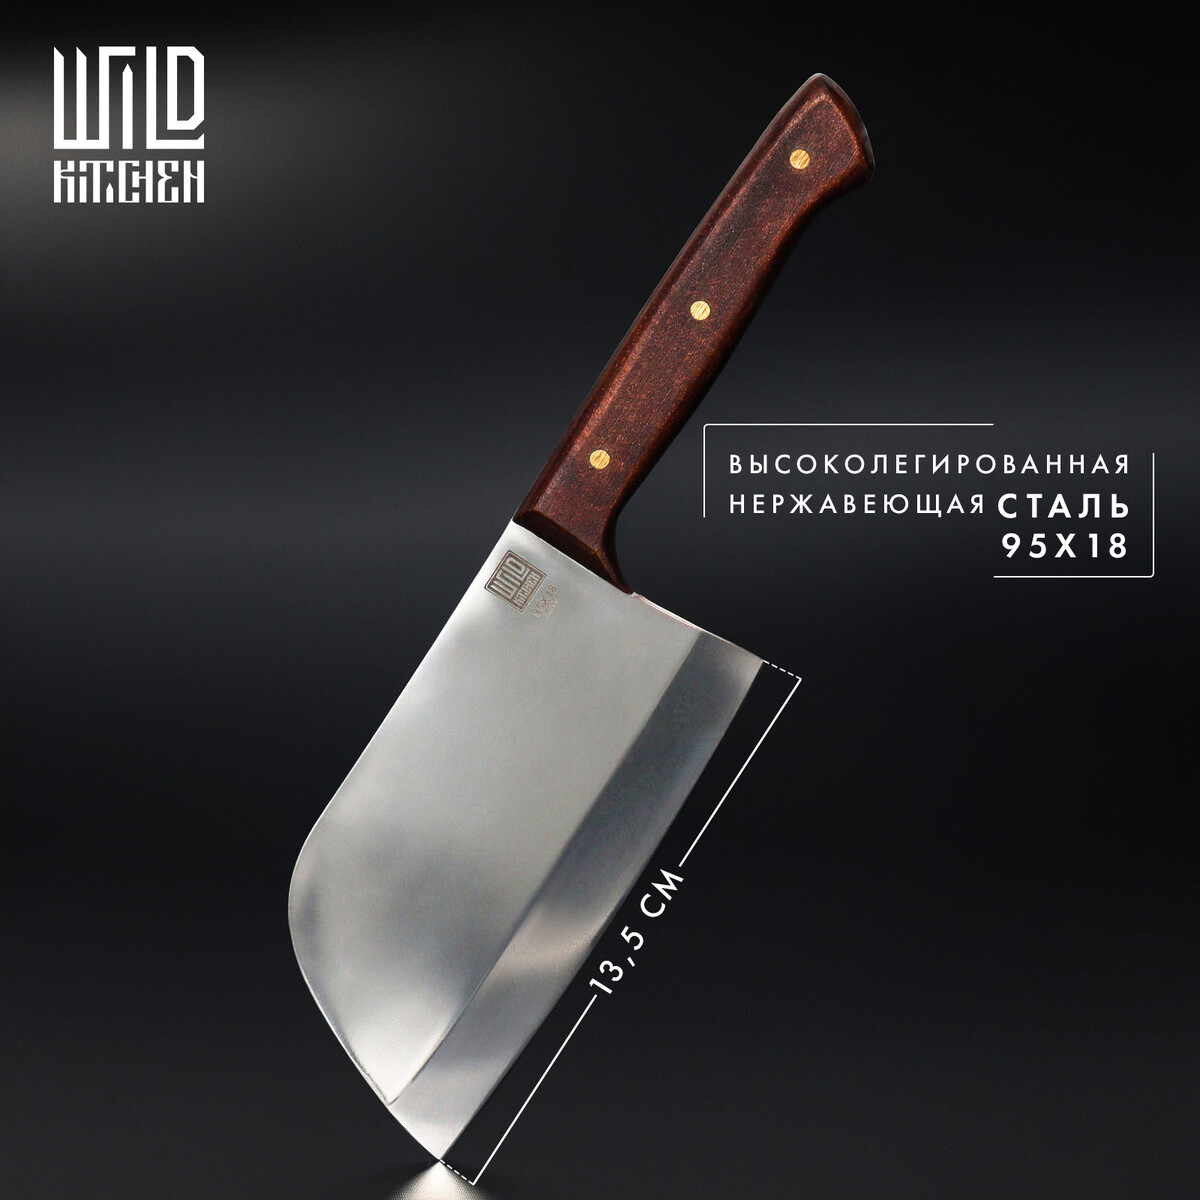 Нож - топорик малый wild kitchen, сталь 95×18, лезвие 13,5 см нож кухонный филейный wild kitchen сталь 95×18 лезвие 17 см